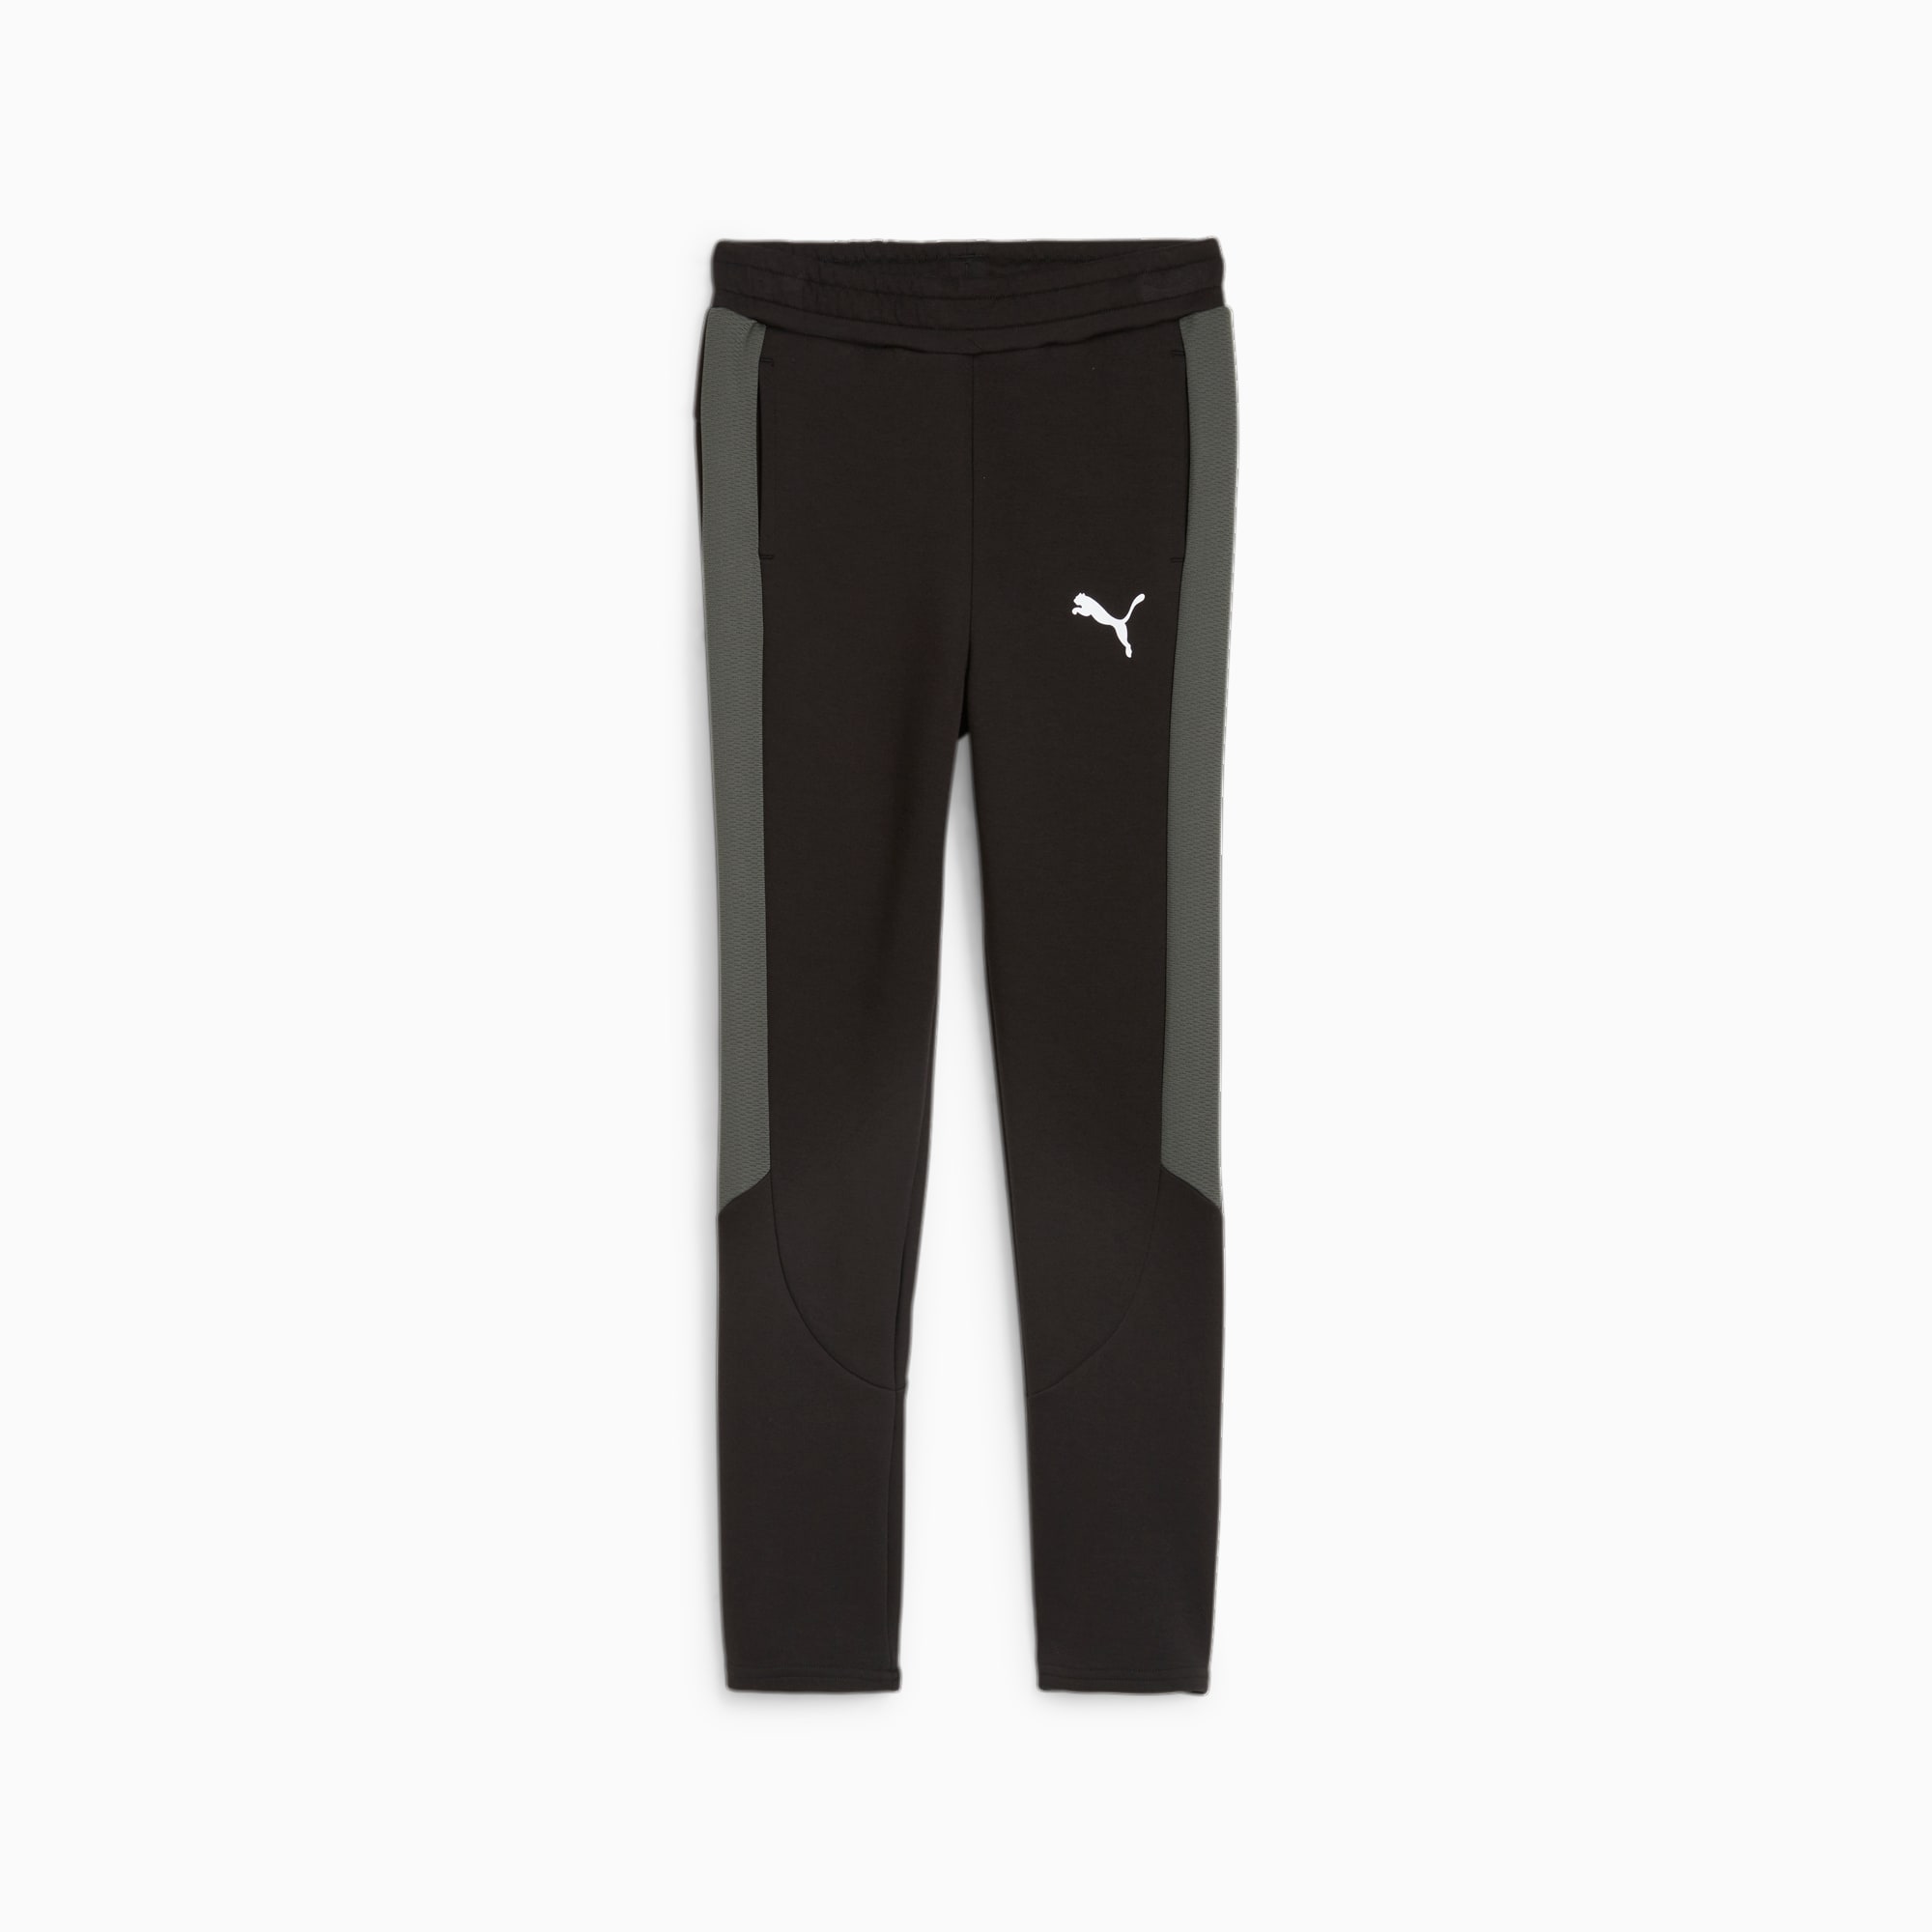 PUMA Evostripe Youth Sweatpants, Black, Size 116, Clothing